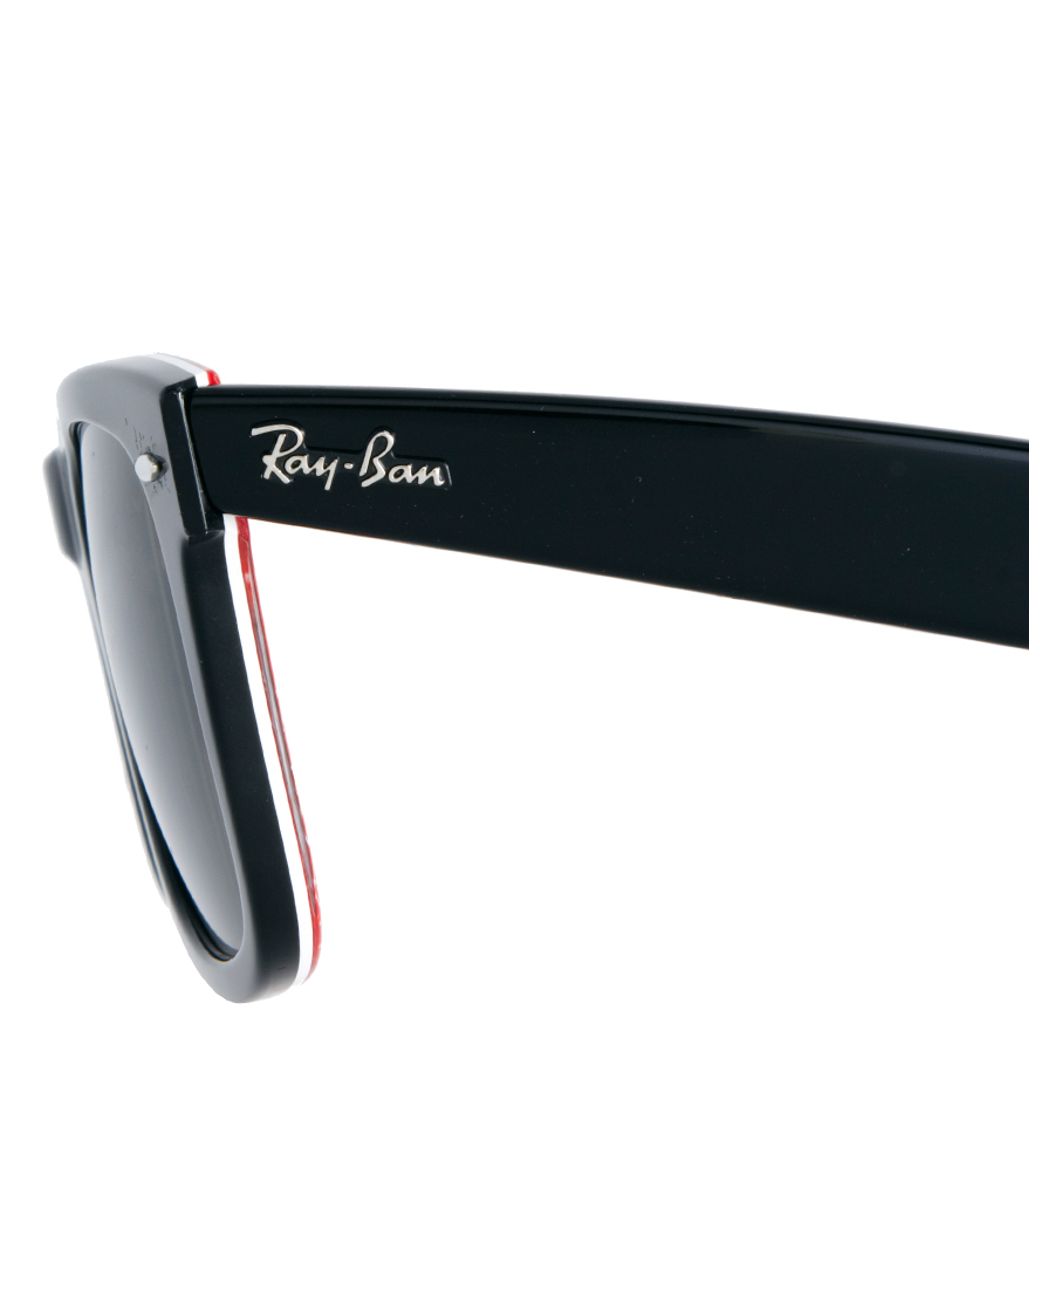 Ray-Ban | Accessories | Rayban Limited Edition Rare Prints Comics Wayfarer  Sunglasses | Poshmark